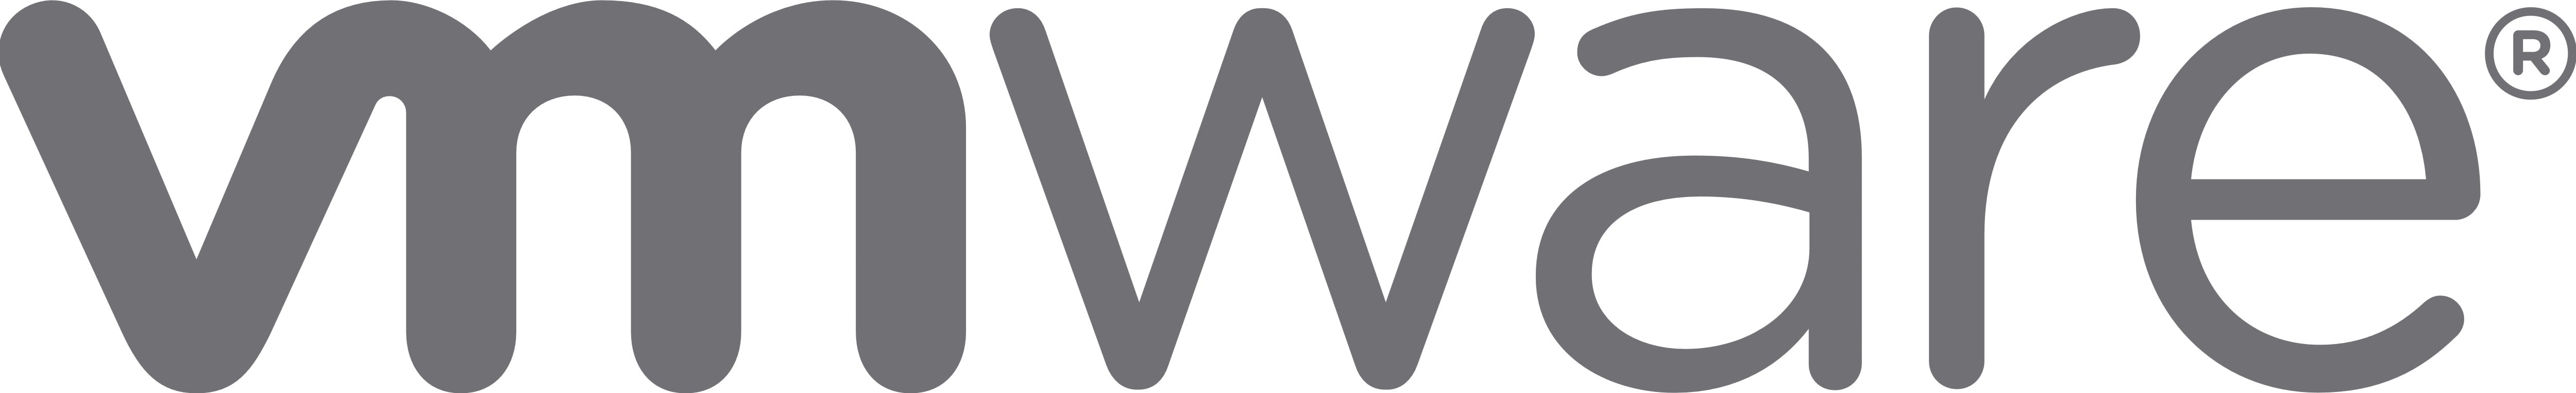 VMware_logo.png